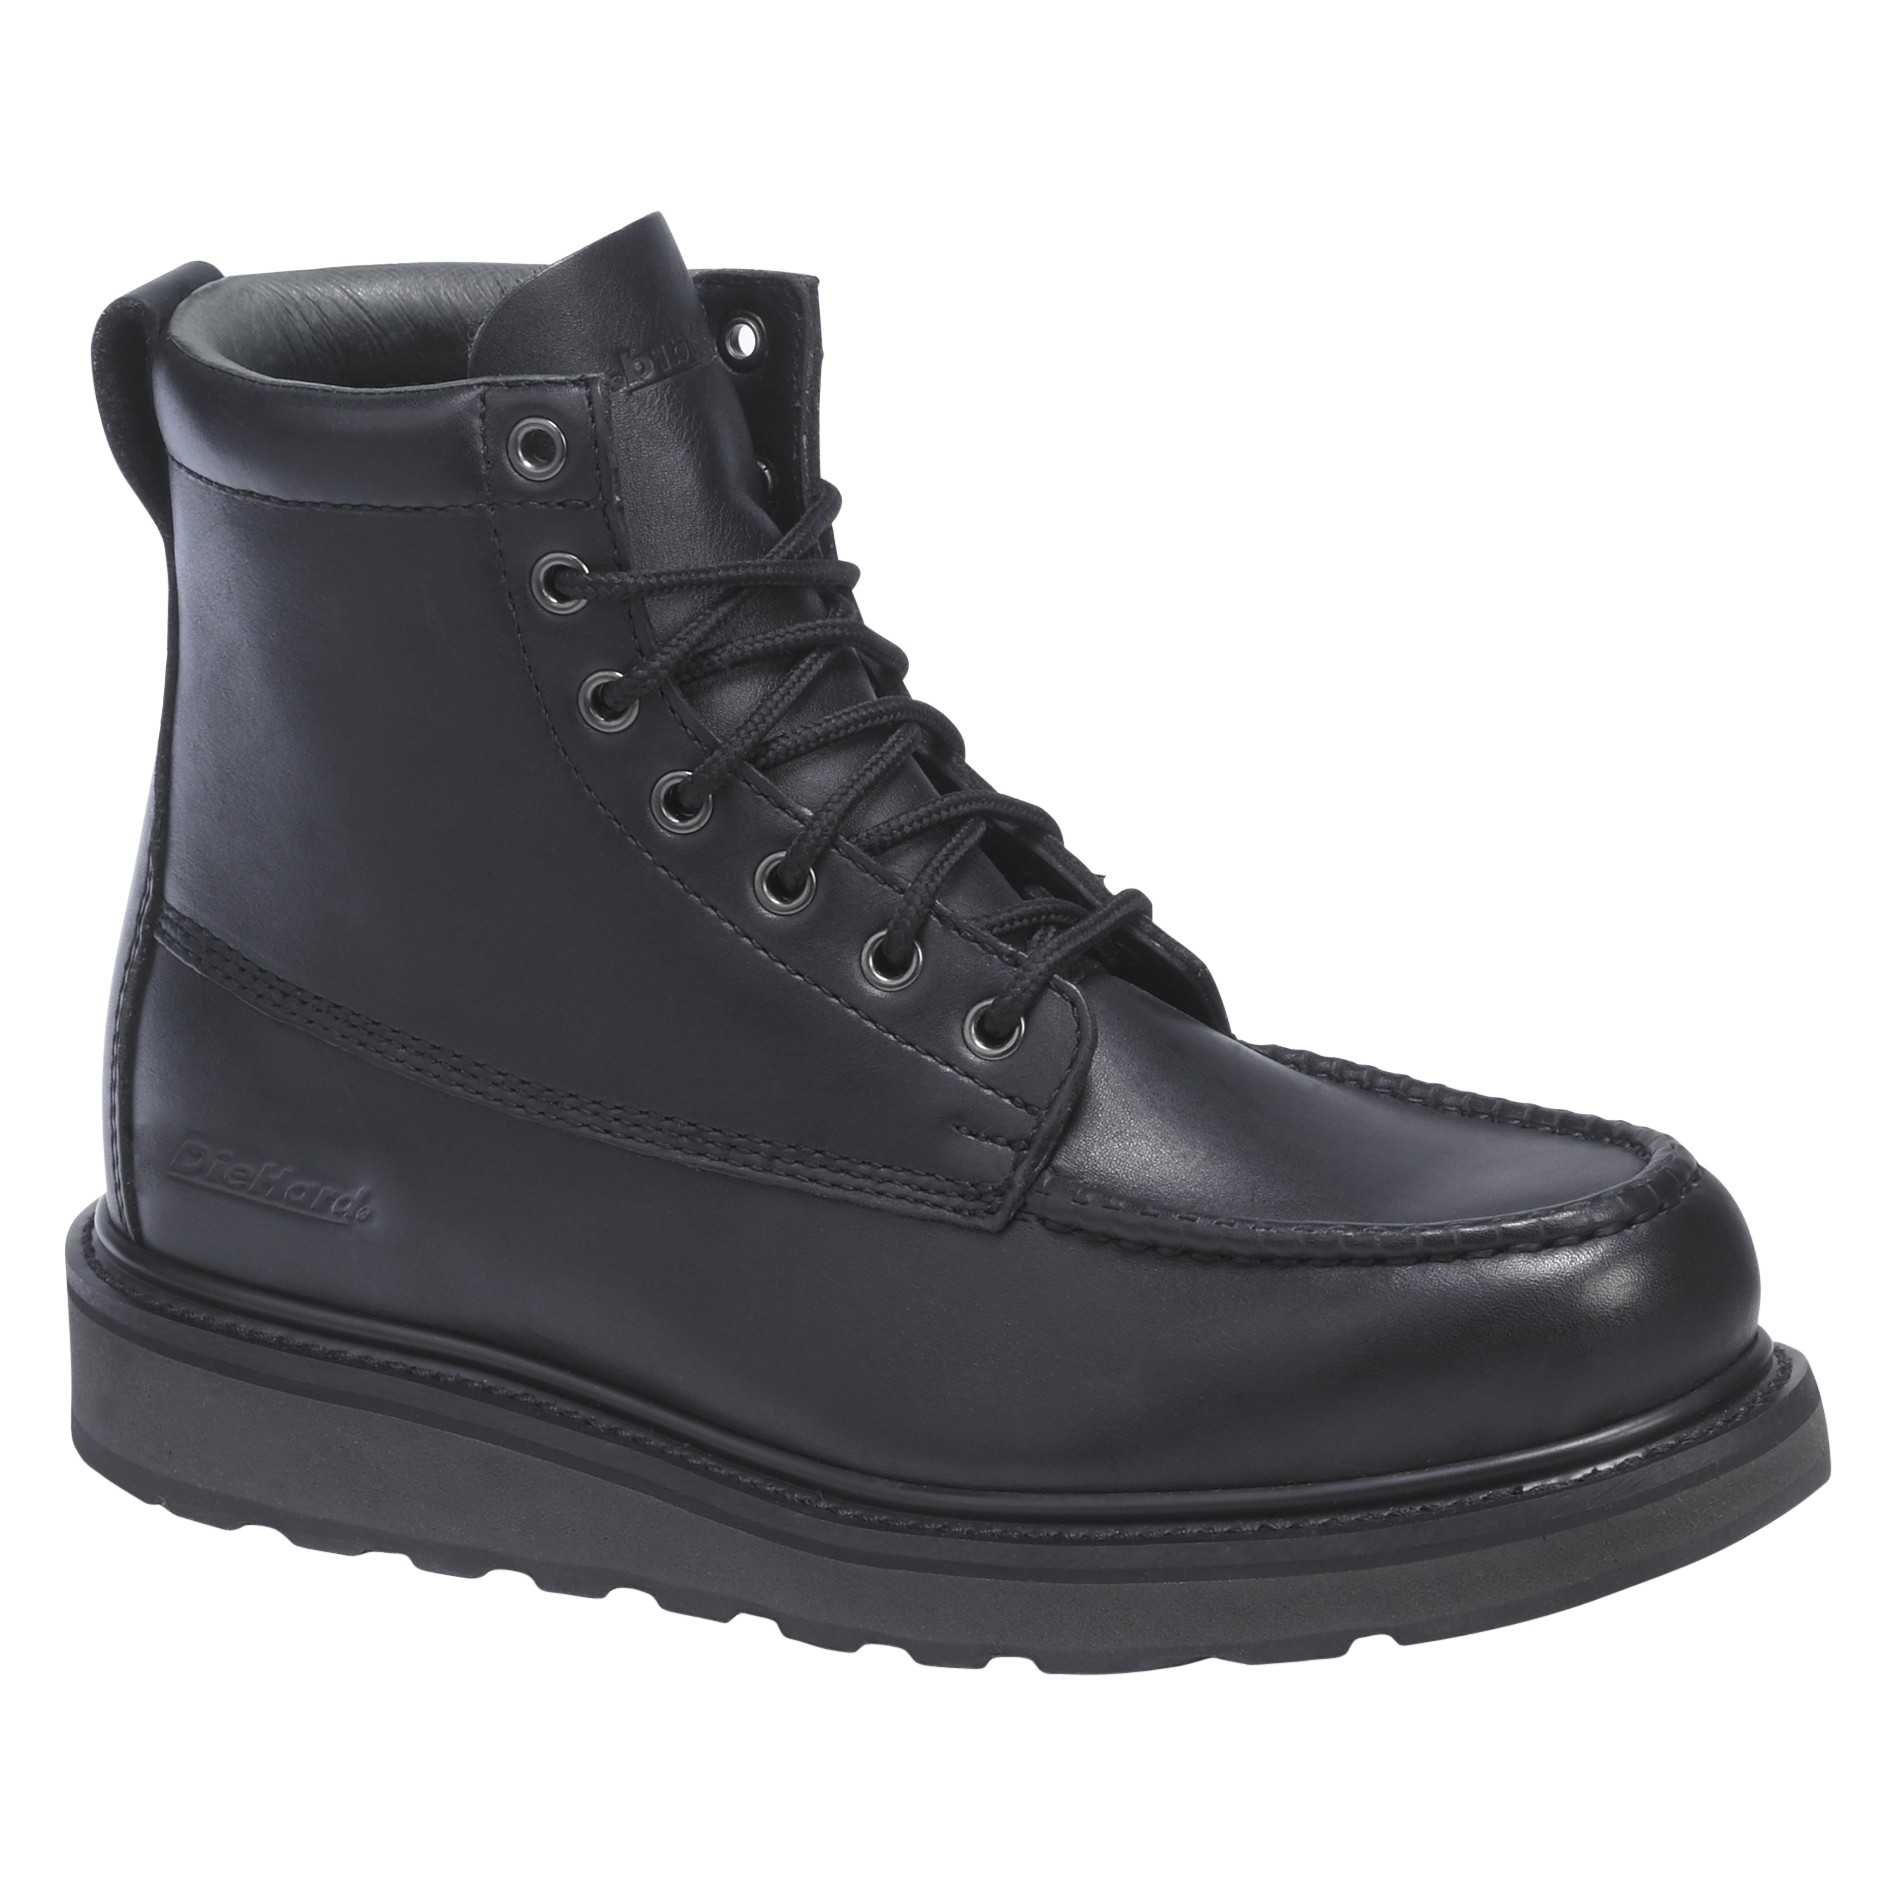 DieHard Men's SureTrack 6"Leather Soft Toe Work Boot - Brown